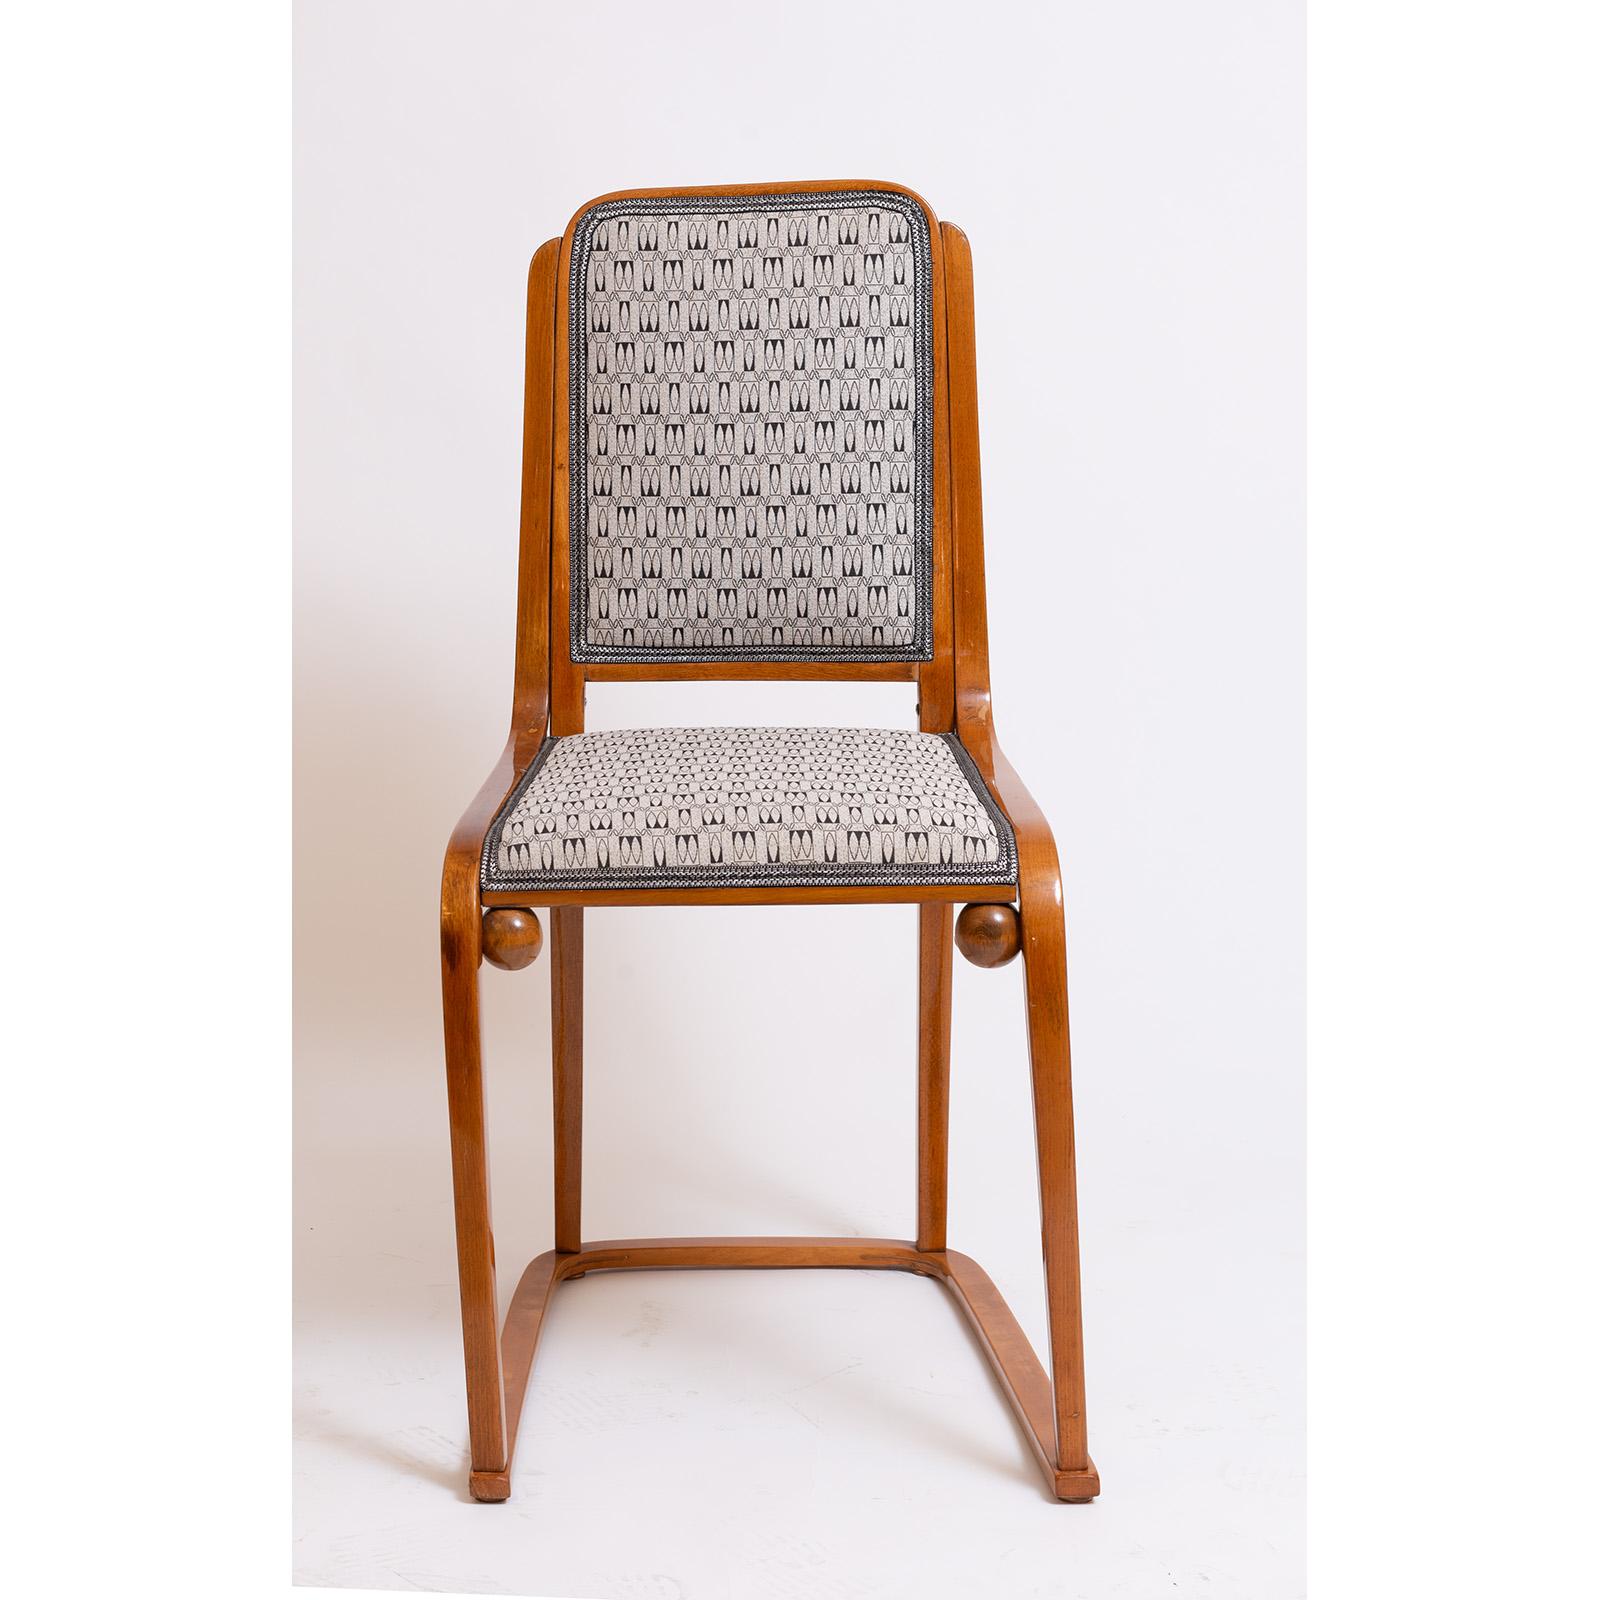 Jugendstil Originals 1905 of the Period Pair of Josef Hoffmann and Jacob &Josef Kohn Chairs For Sale